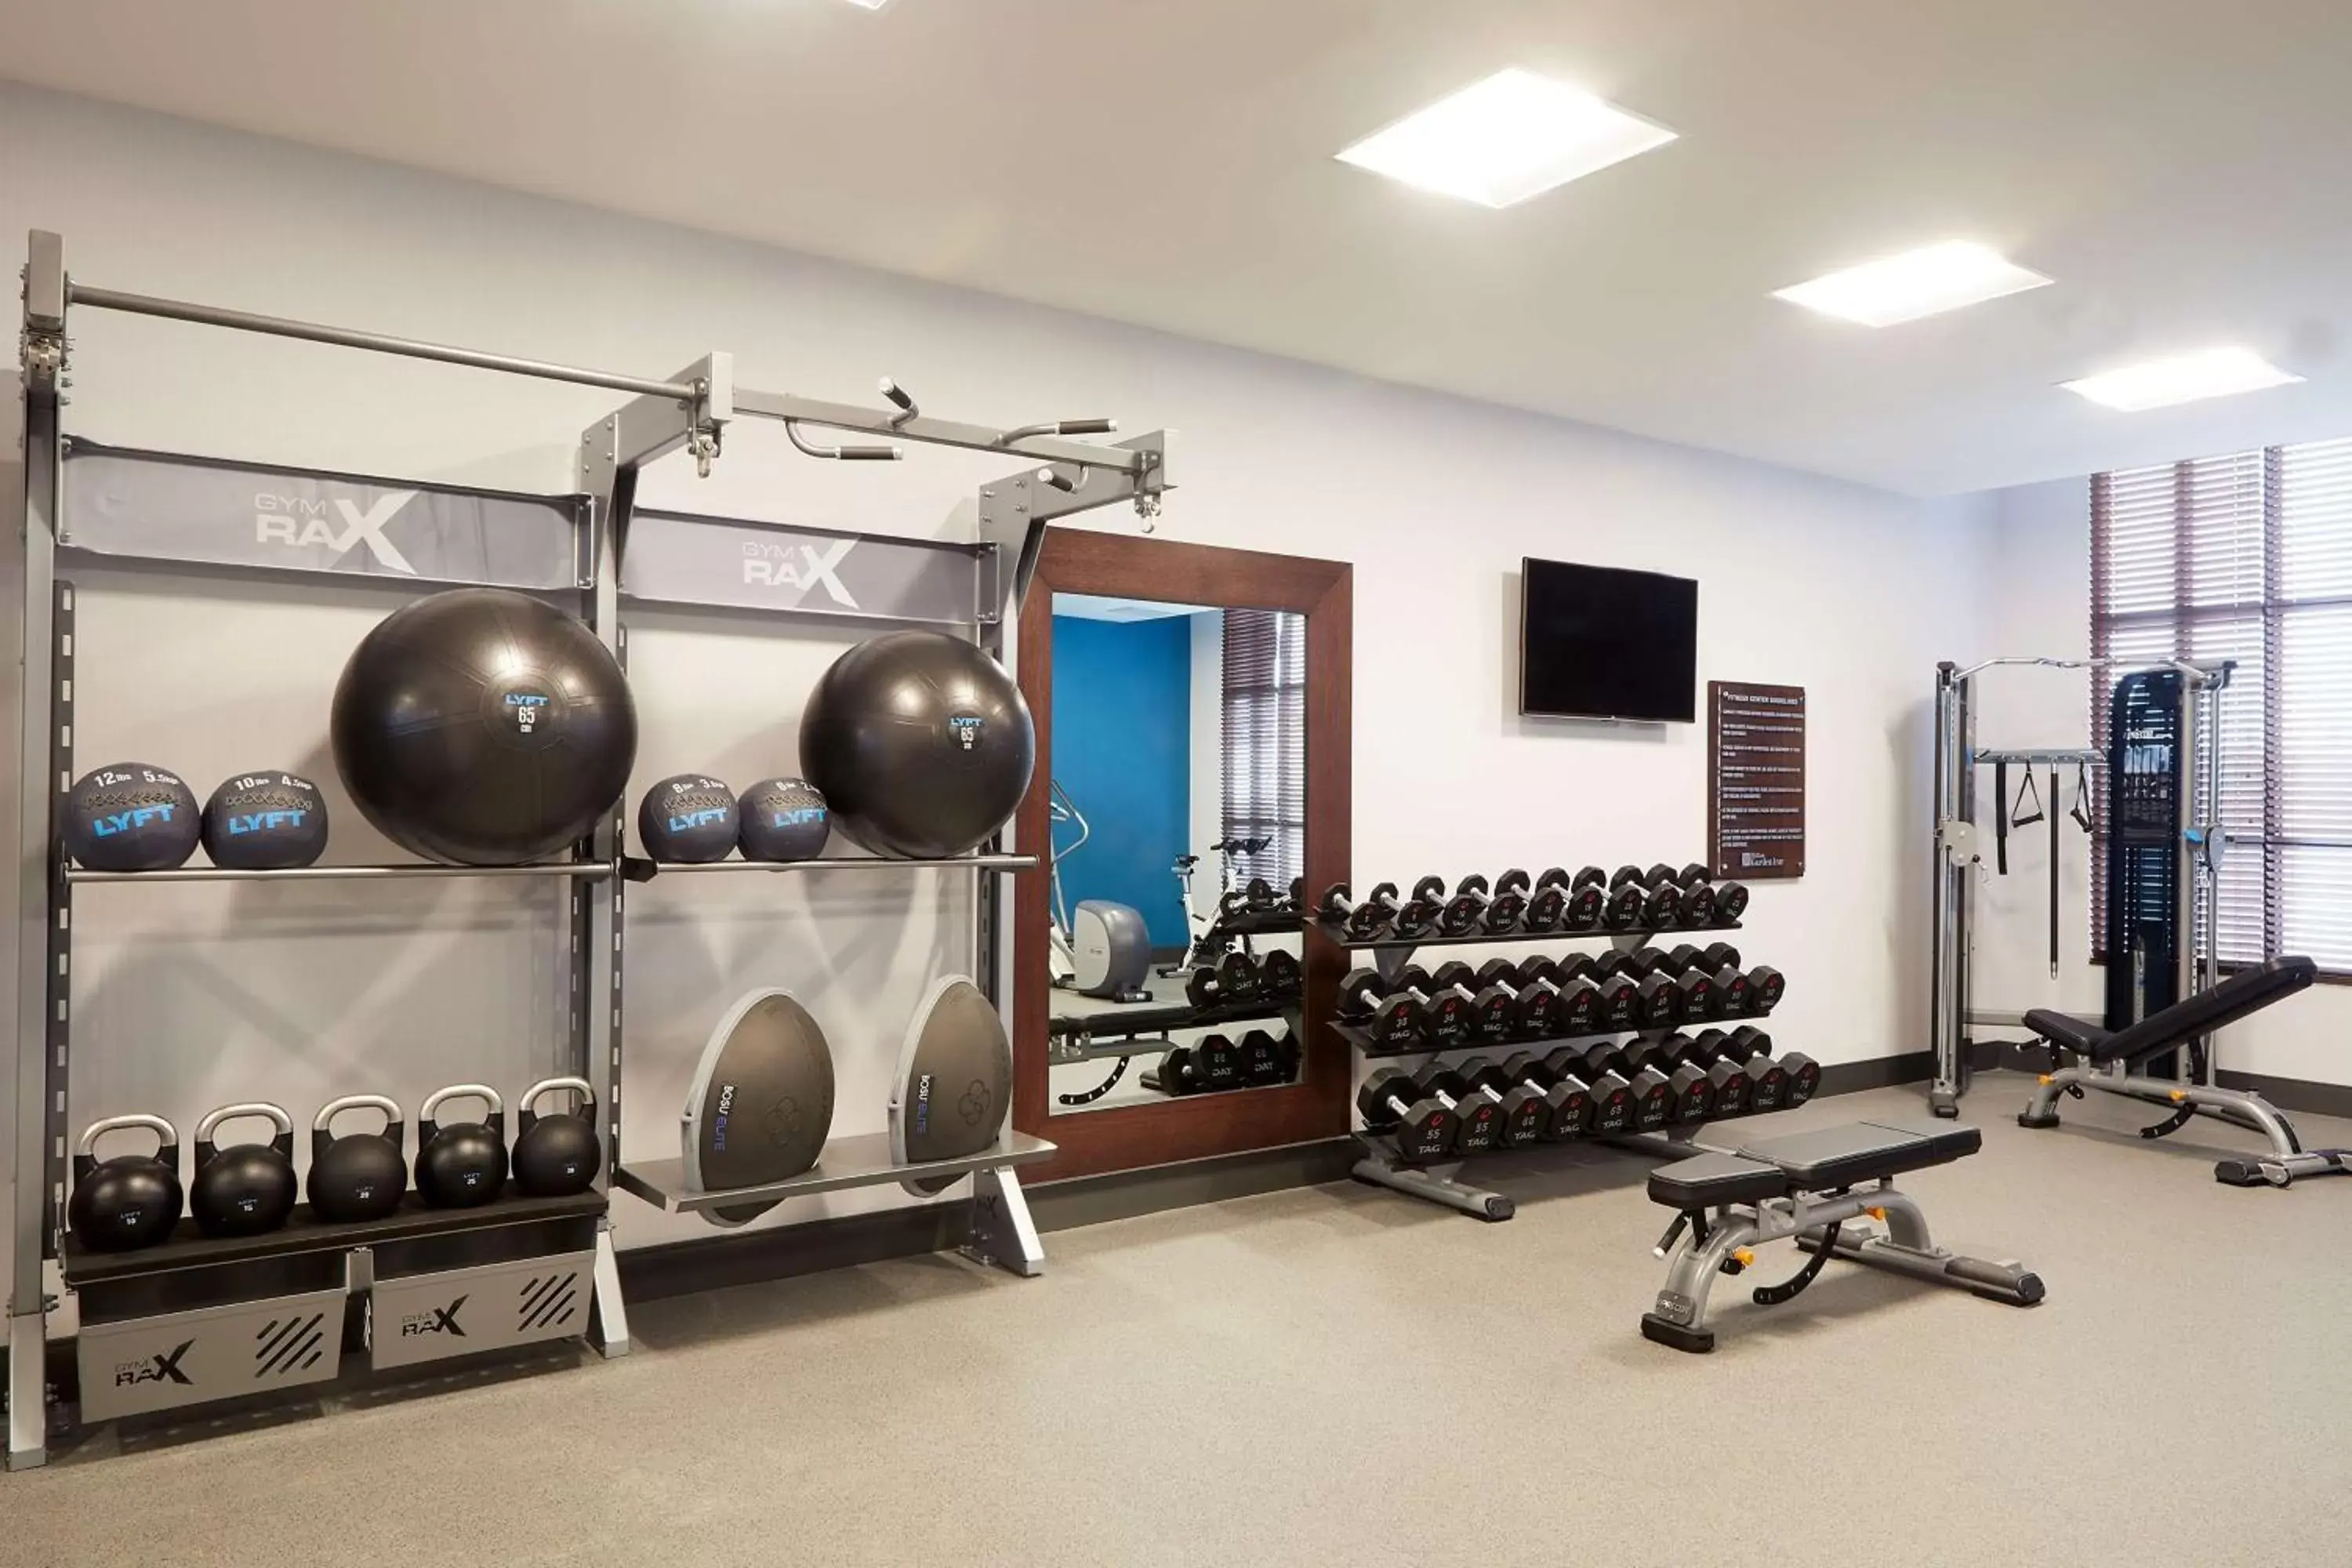 Fitness centre/facilities, Fitness Center/Facilities in Hilton Garden Inn Elizabethtown